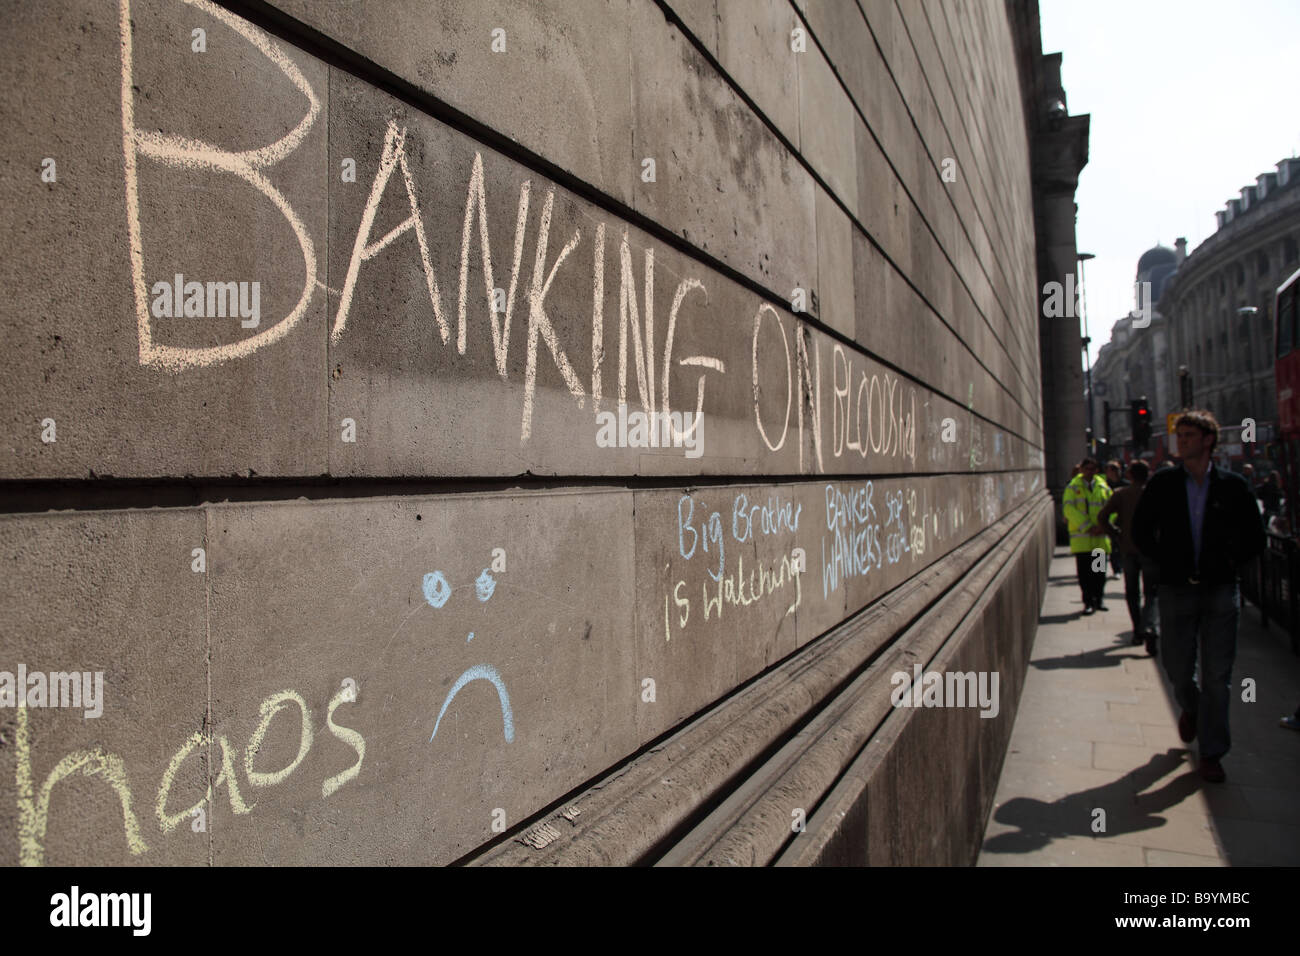 Graffiti outside the Bank of England drawn during the 2009 G20 summit, London, UK. Stock Photo